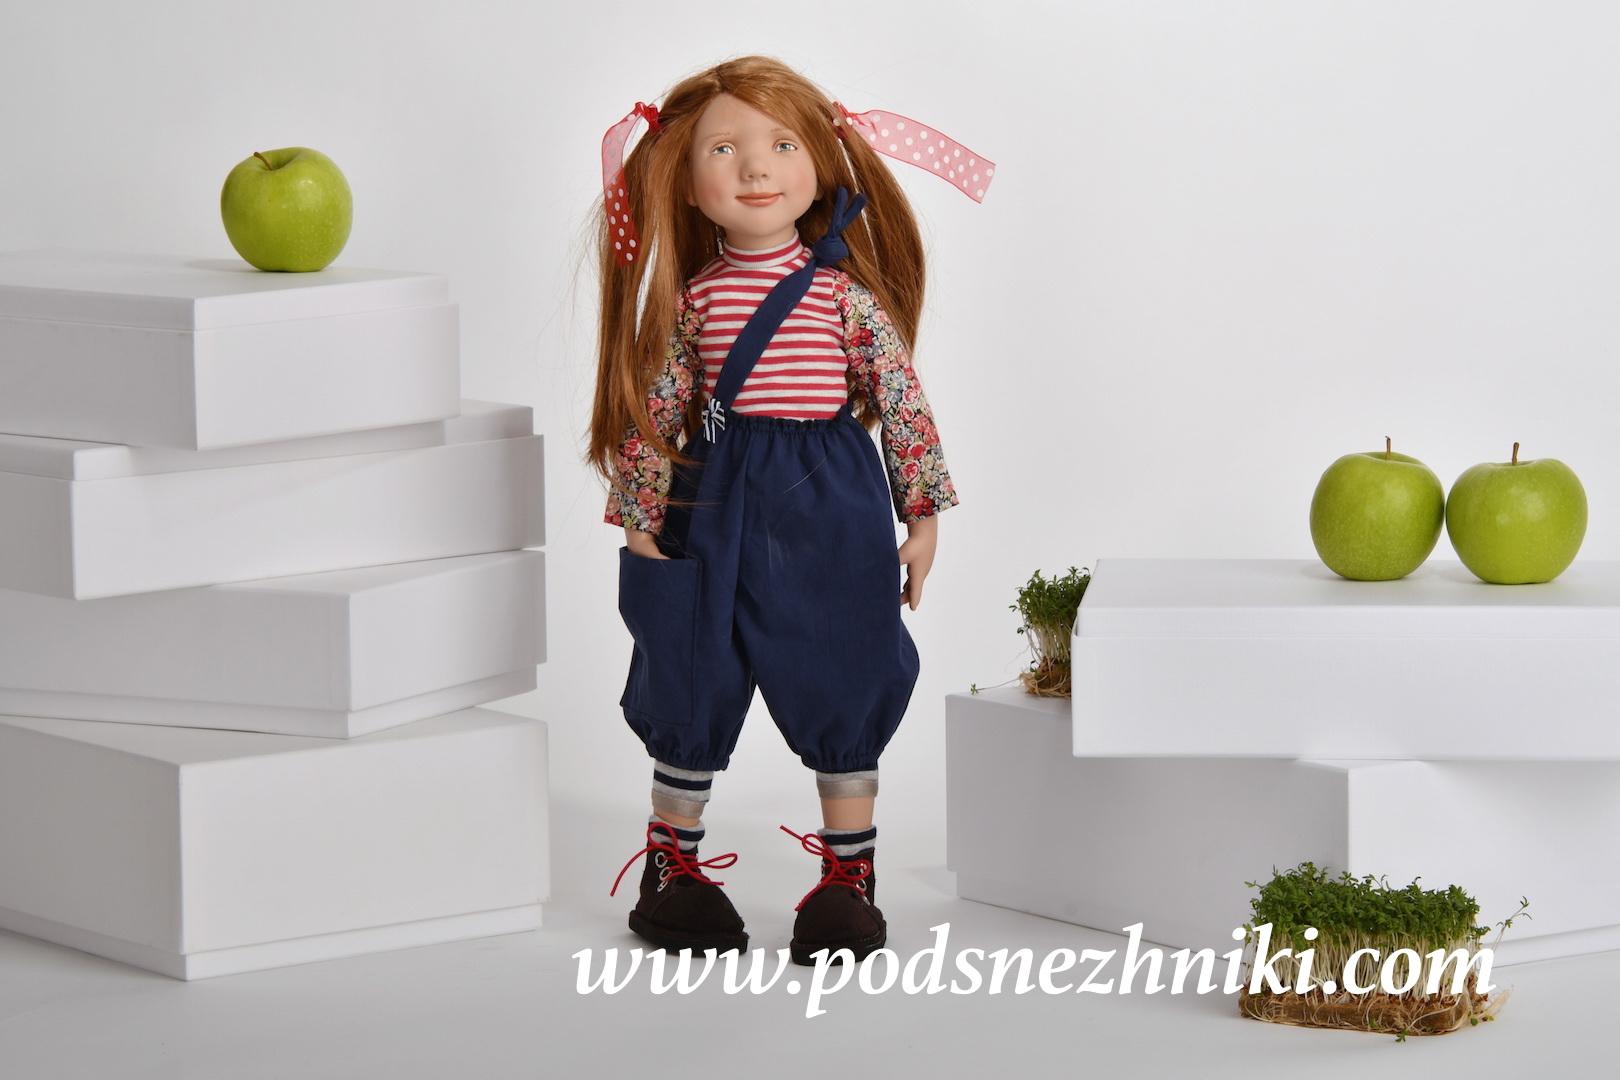 Zwergnase Игровая кукла Ann-Mina